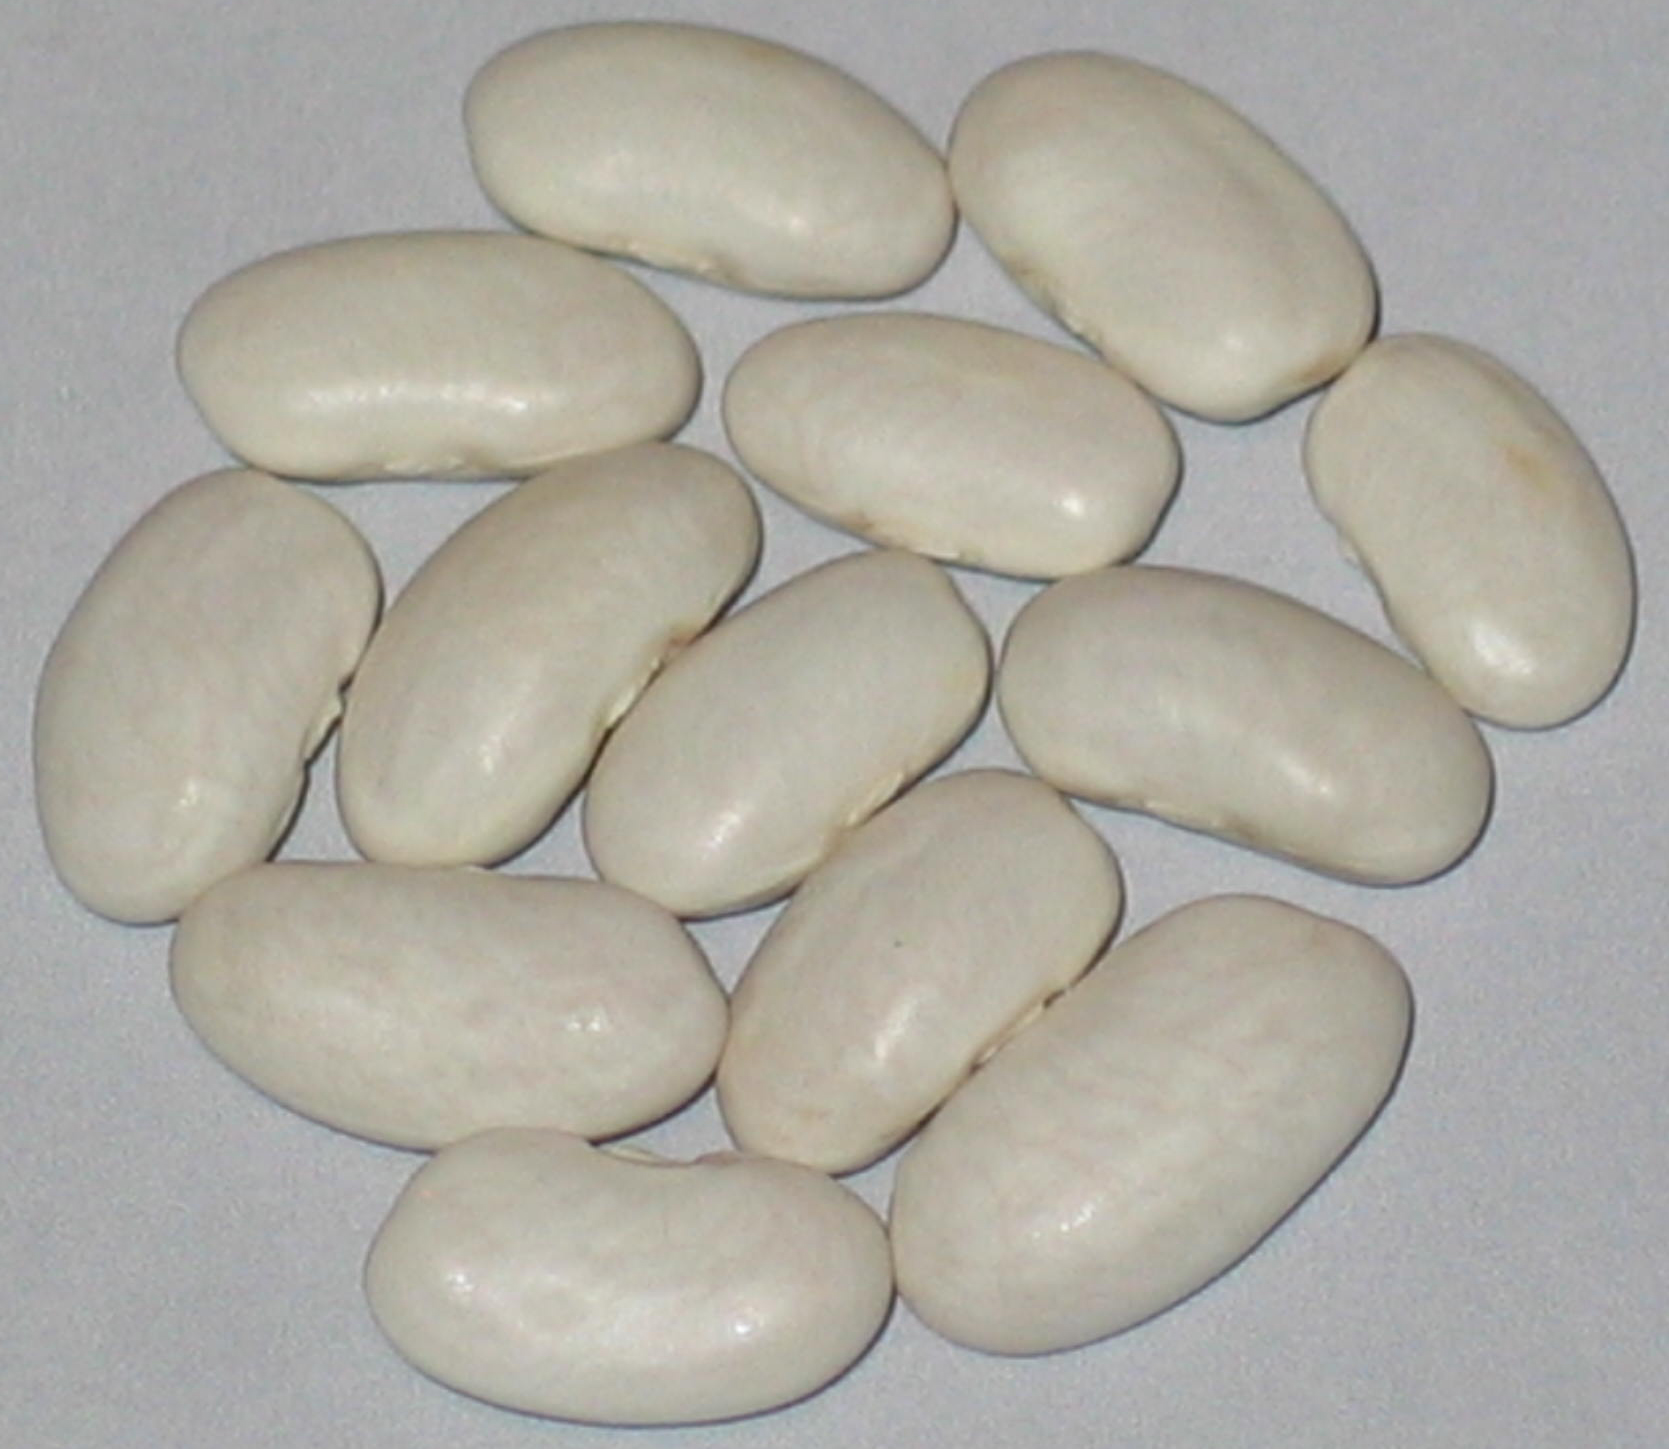 image of Kentucky Wonder White Seeded beans